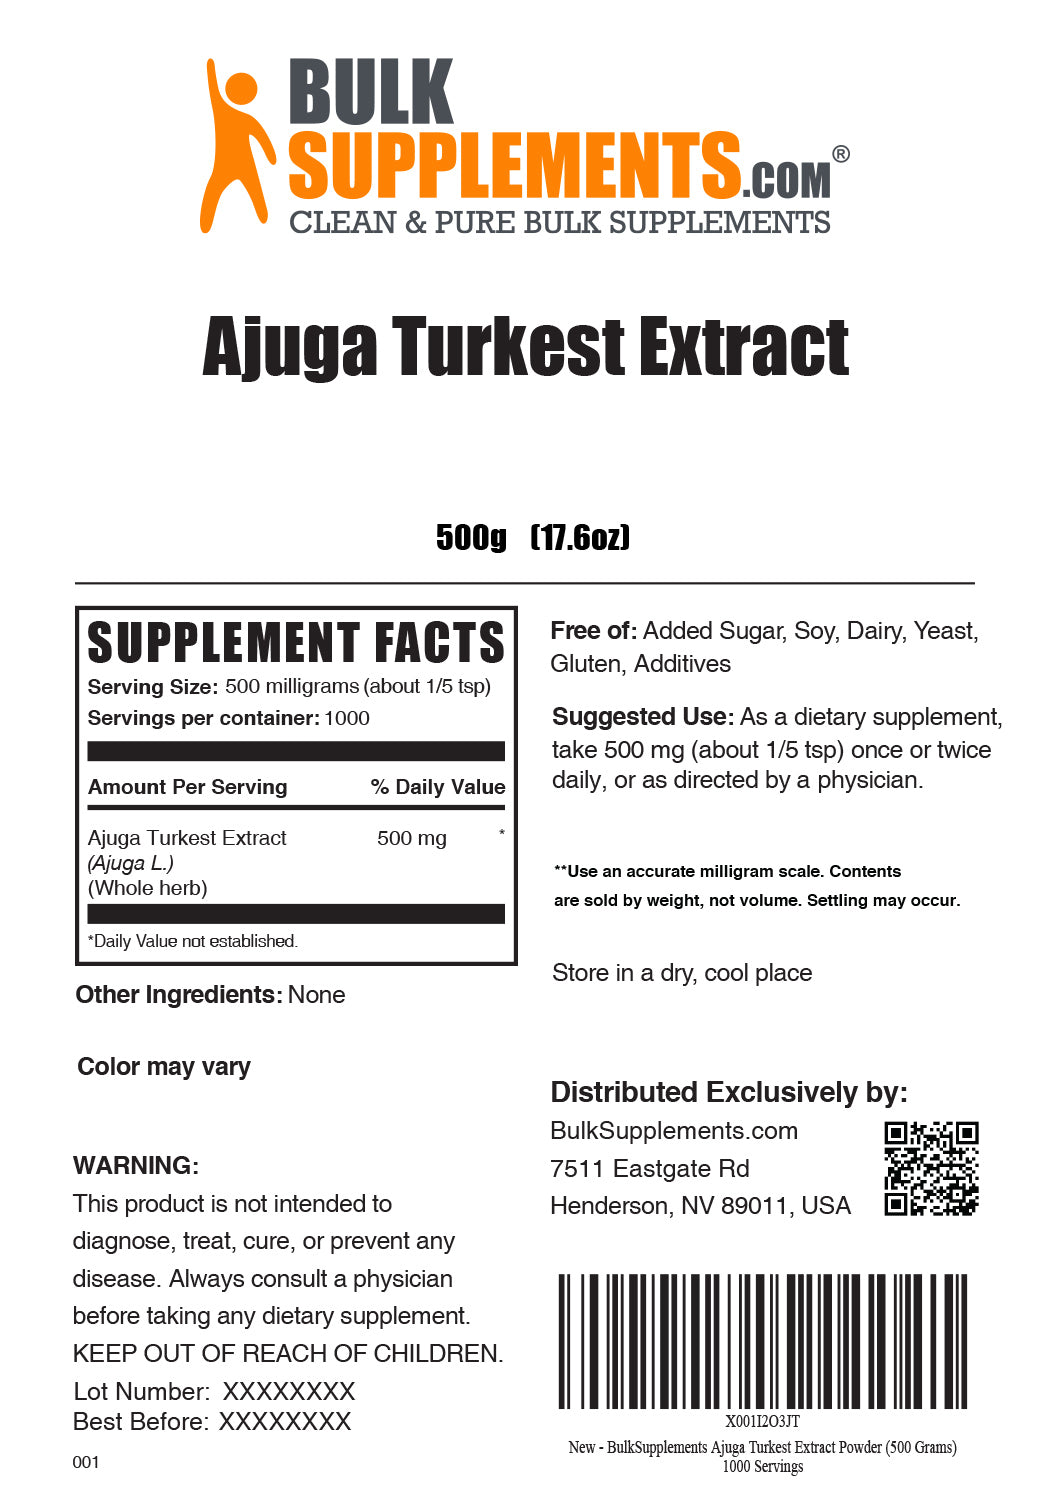 Ajuga Turkest Extract Supplement Facts, 500g